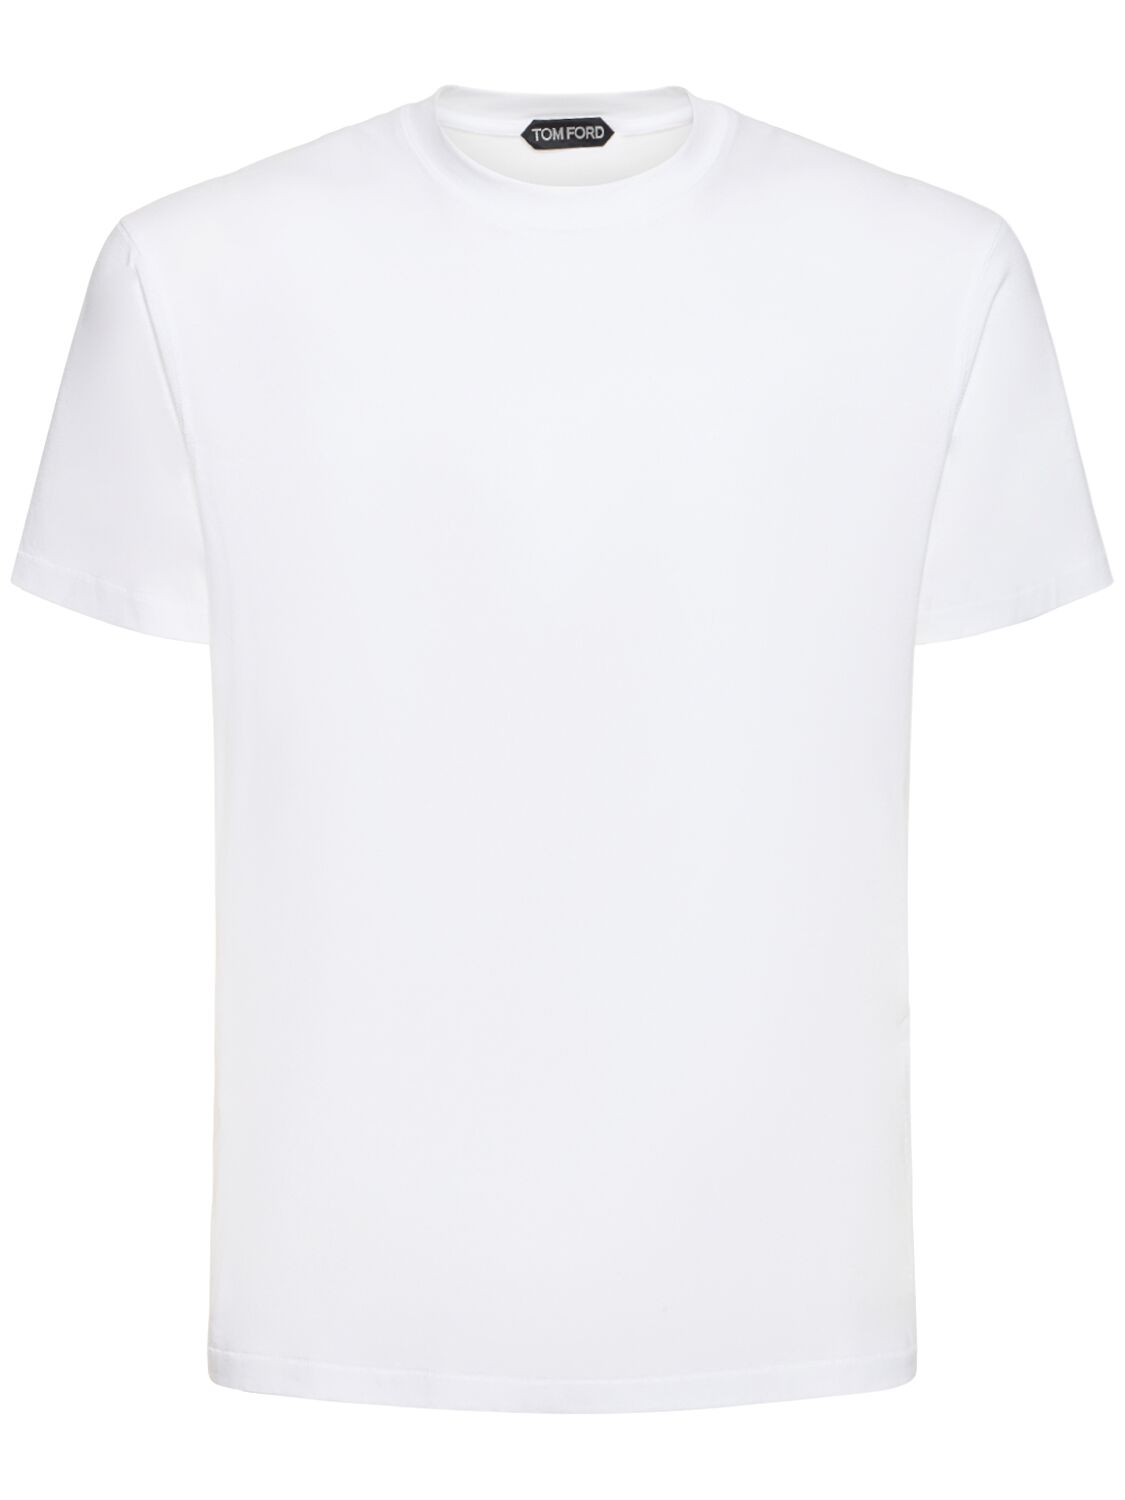 T-shirt Manches Courtes En Lyocell Et Coton - TOM FORD - Modalova